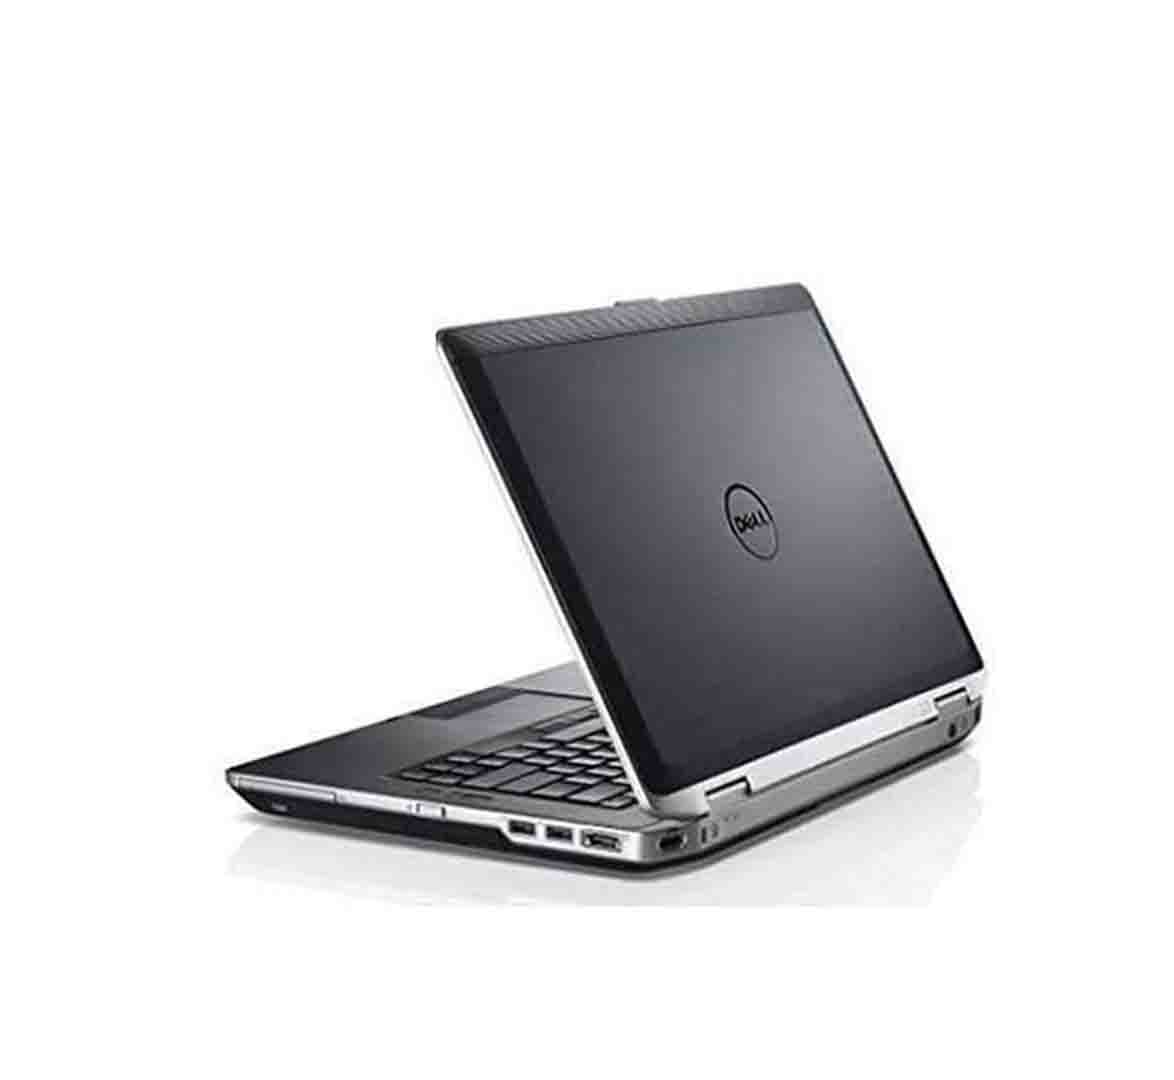 Dell Latitude E6420 Business Laptop, Intel Core i7-2nd Gen CPU, 4GB RAM, 320GB HDD, 14 inch Display, Windows 10 Pro, Refurbished Laptop